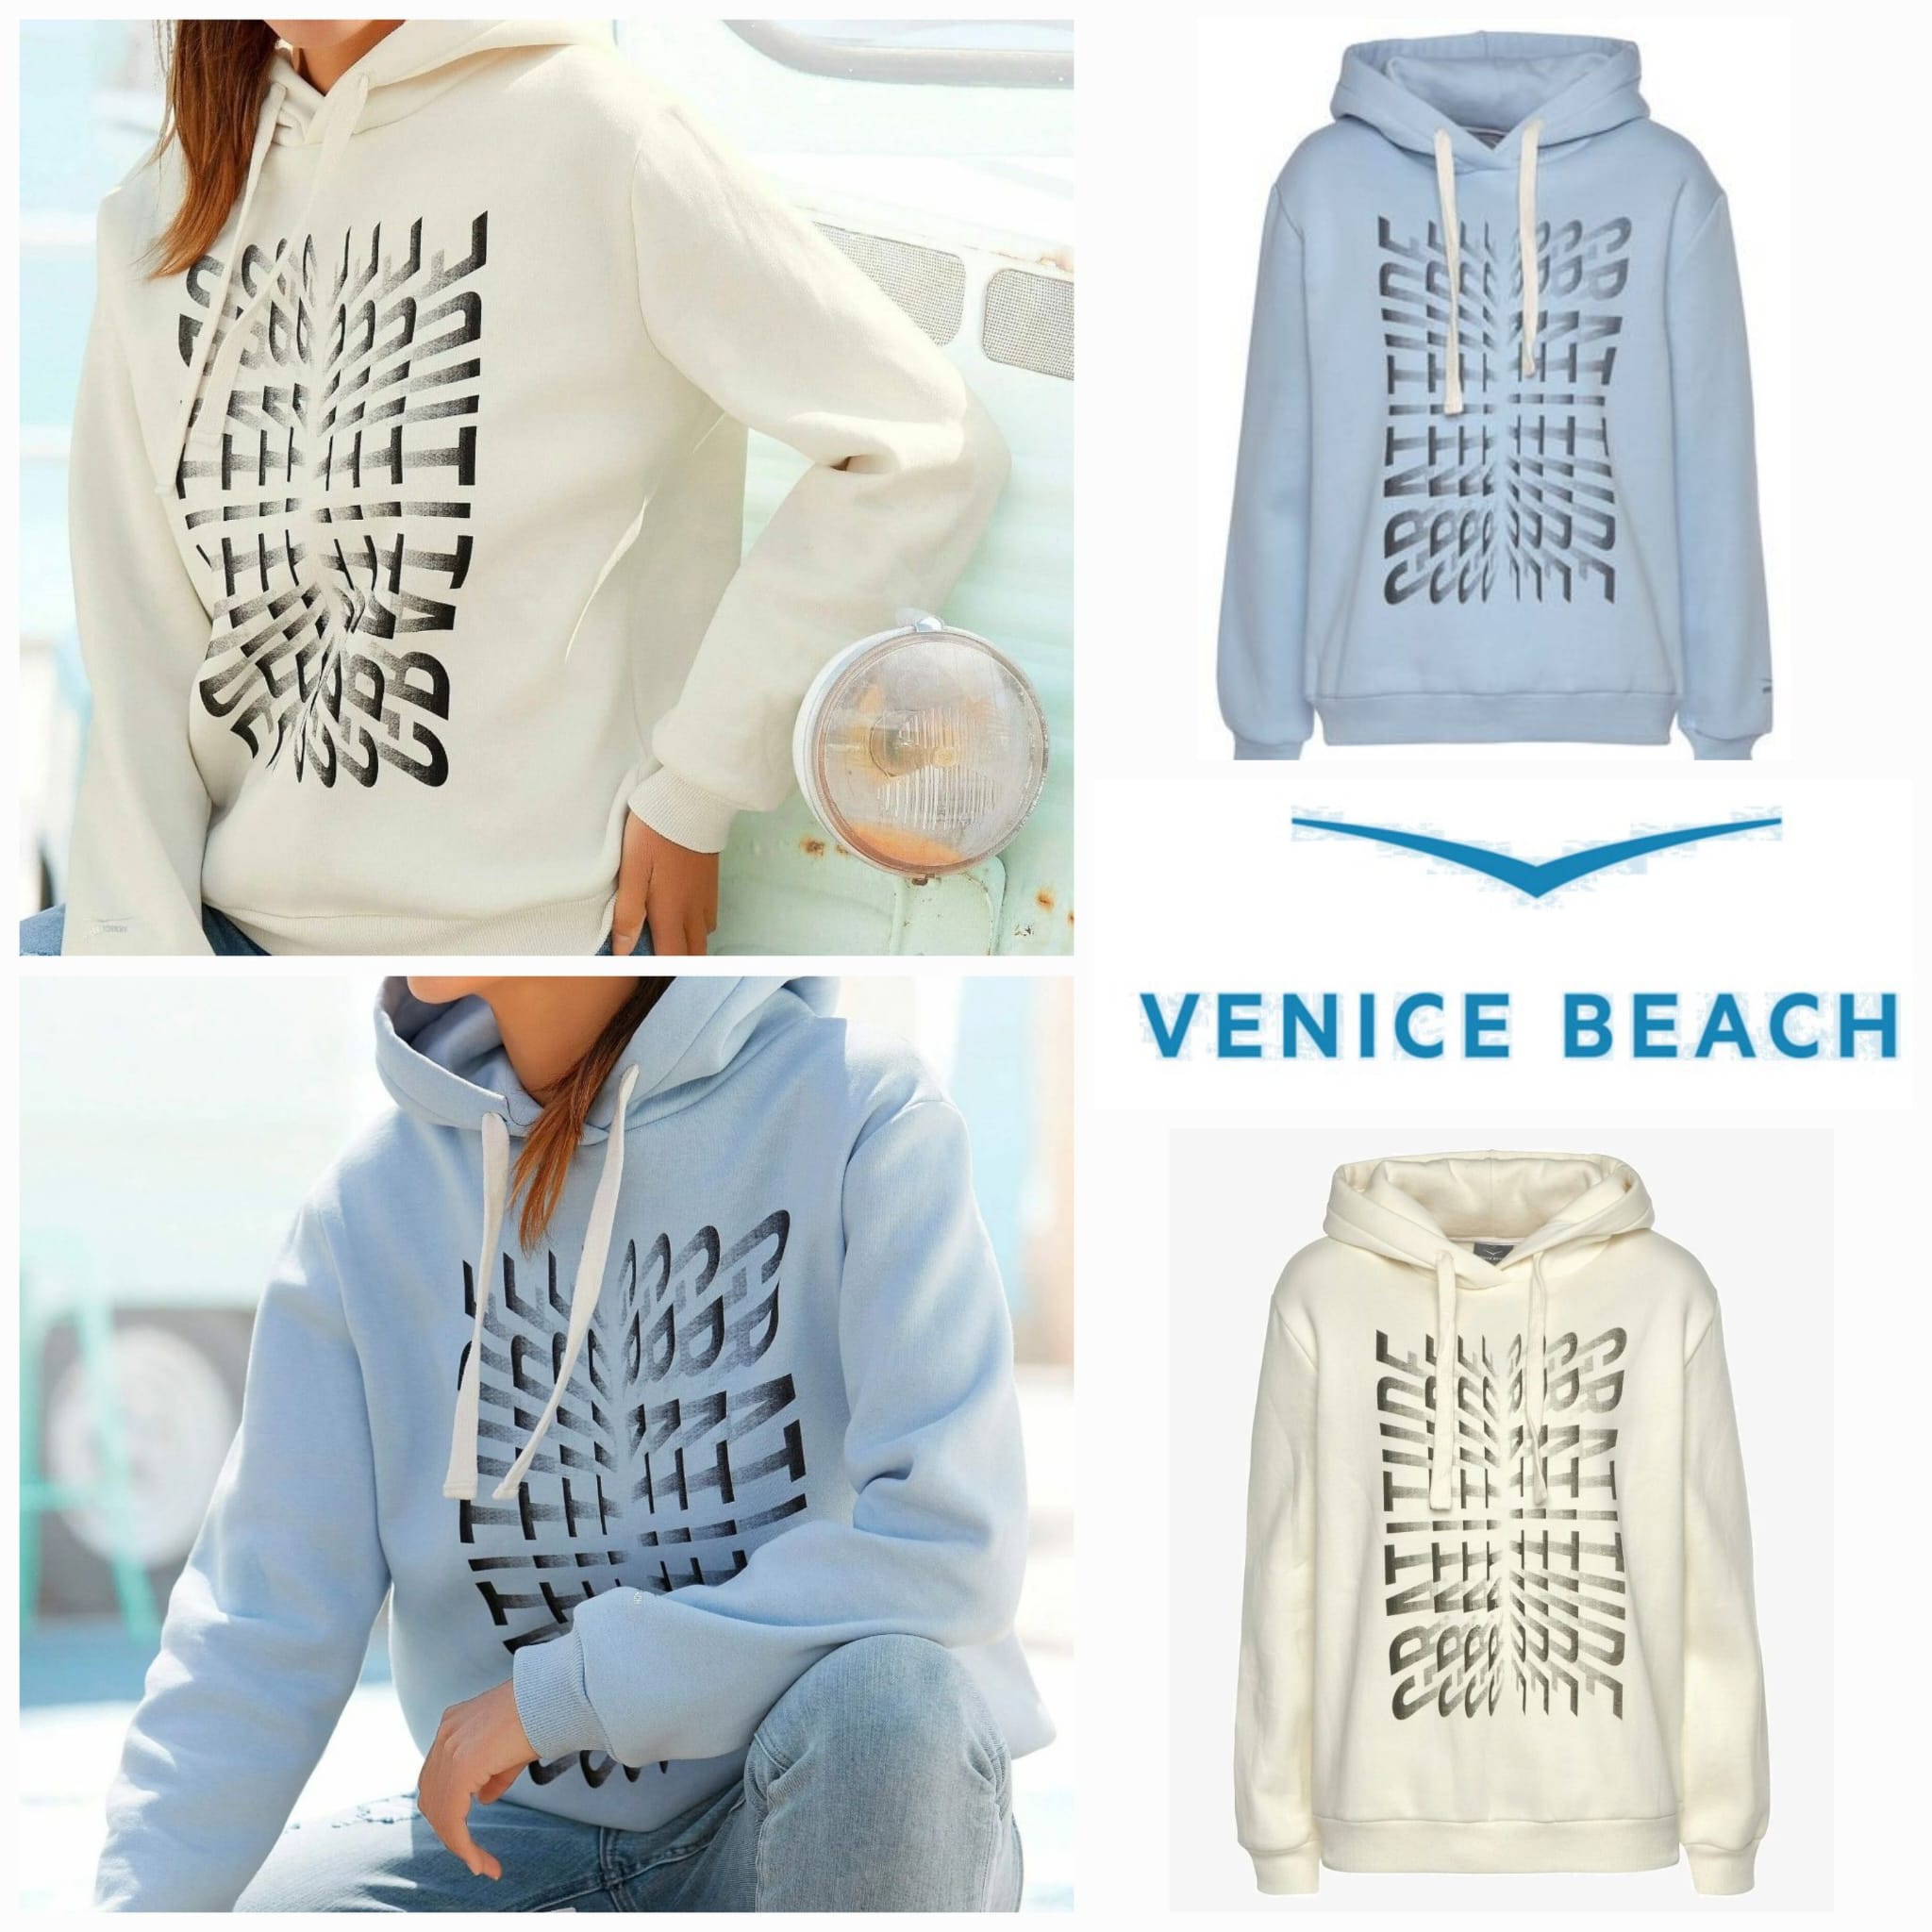 Women's hoodies from Venice Beach